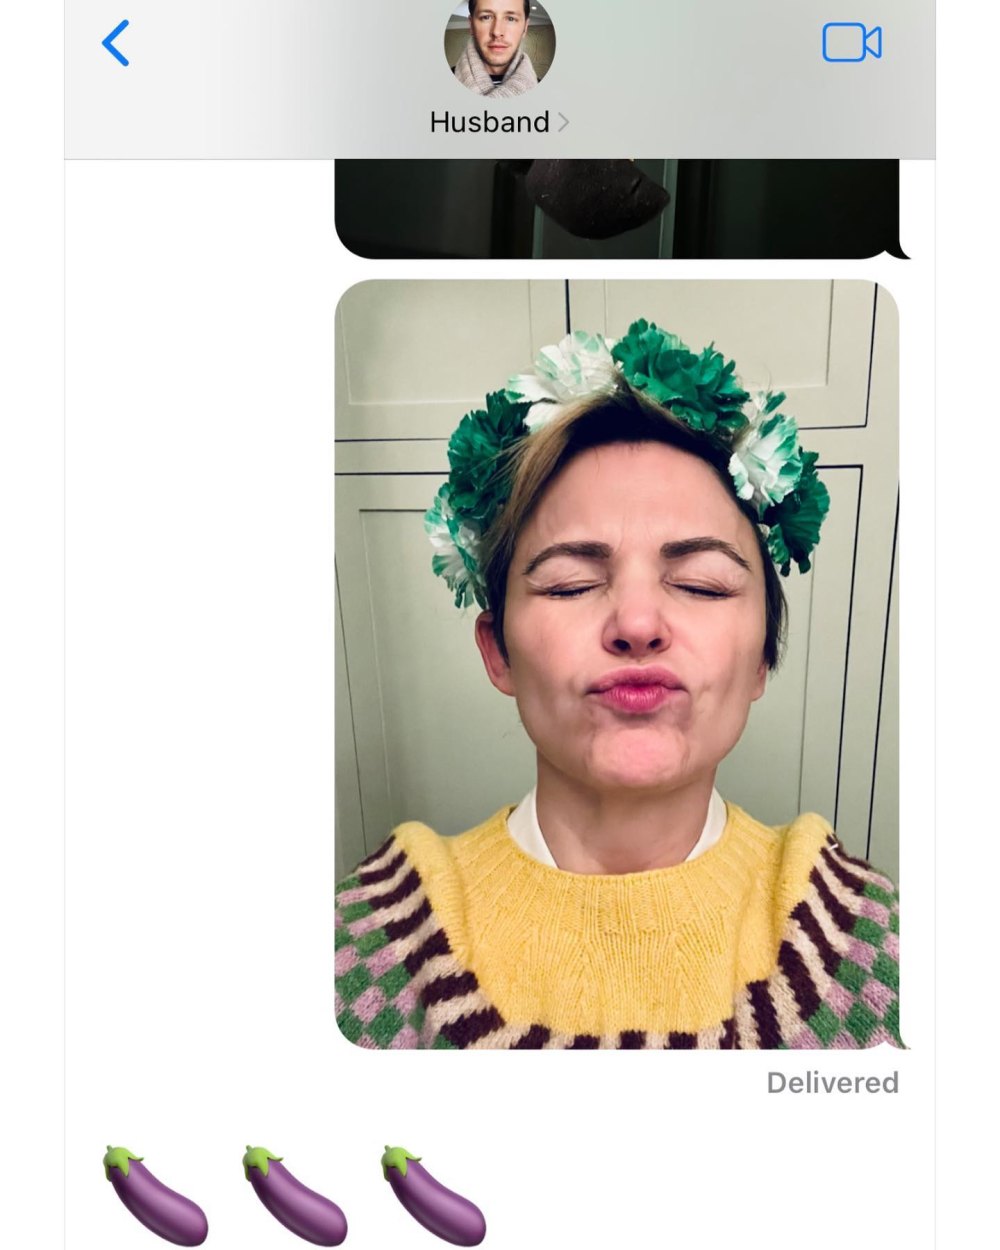 Ginnifer Goodwins Husband Josh Dallas Sends NSFW Response to Her St Patricks Day Selfie Via Text